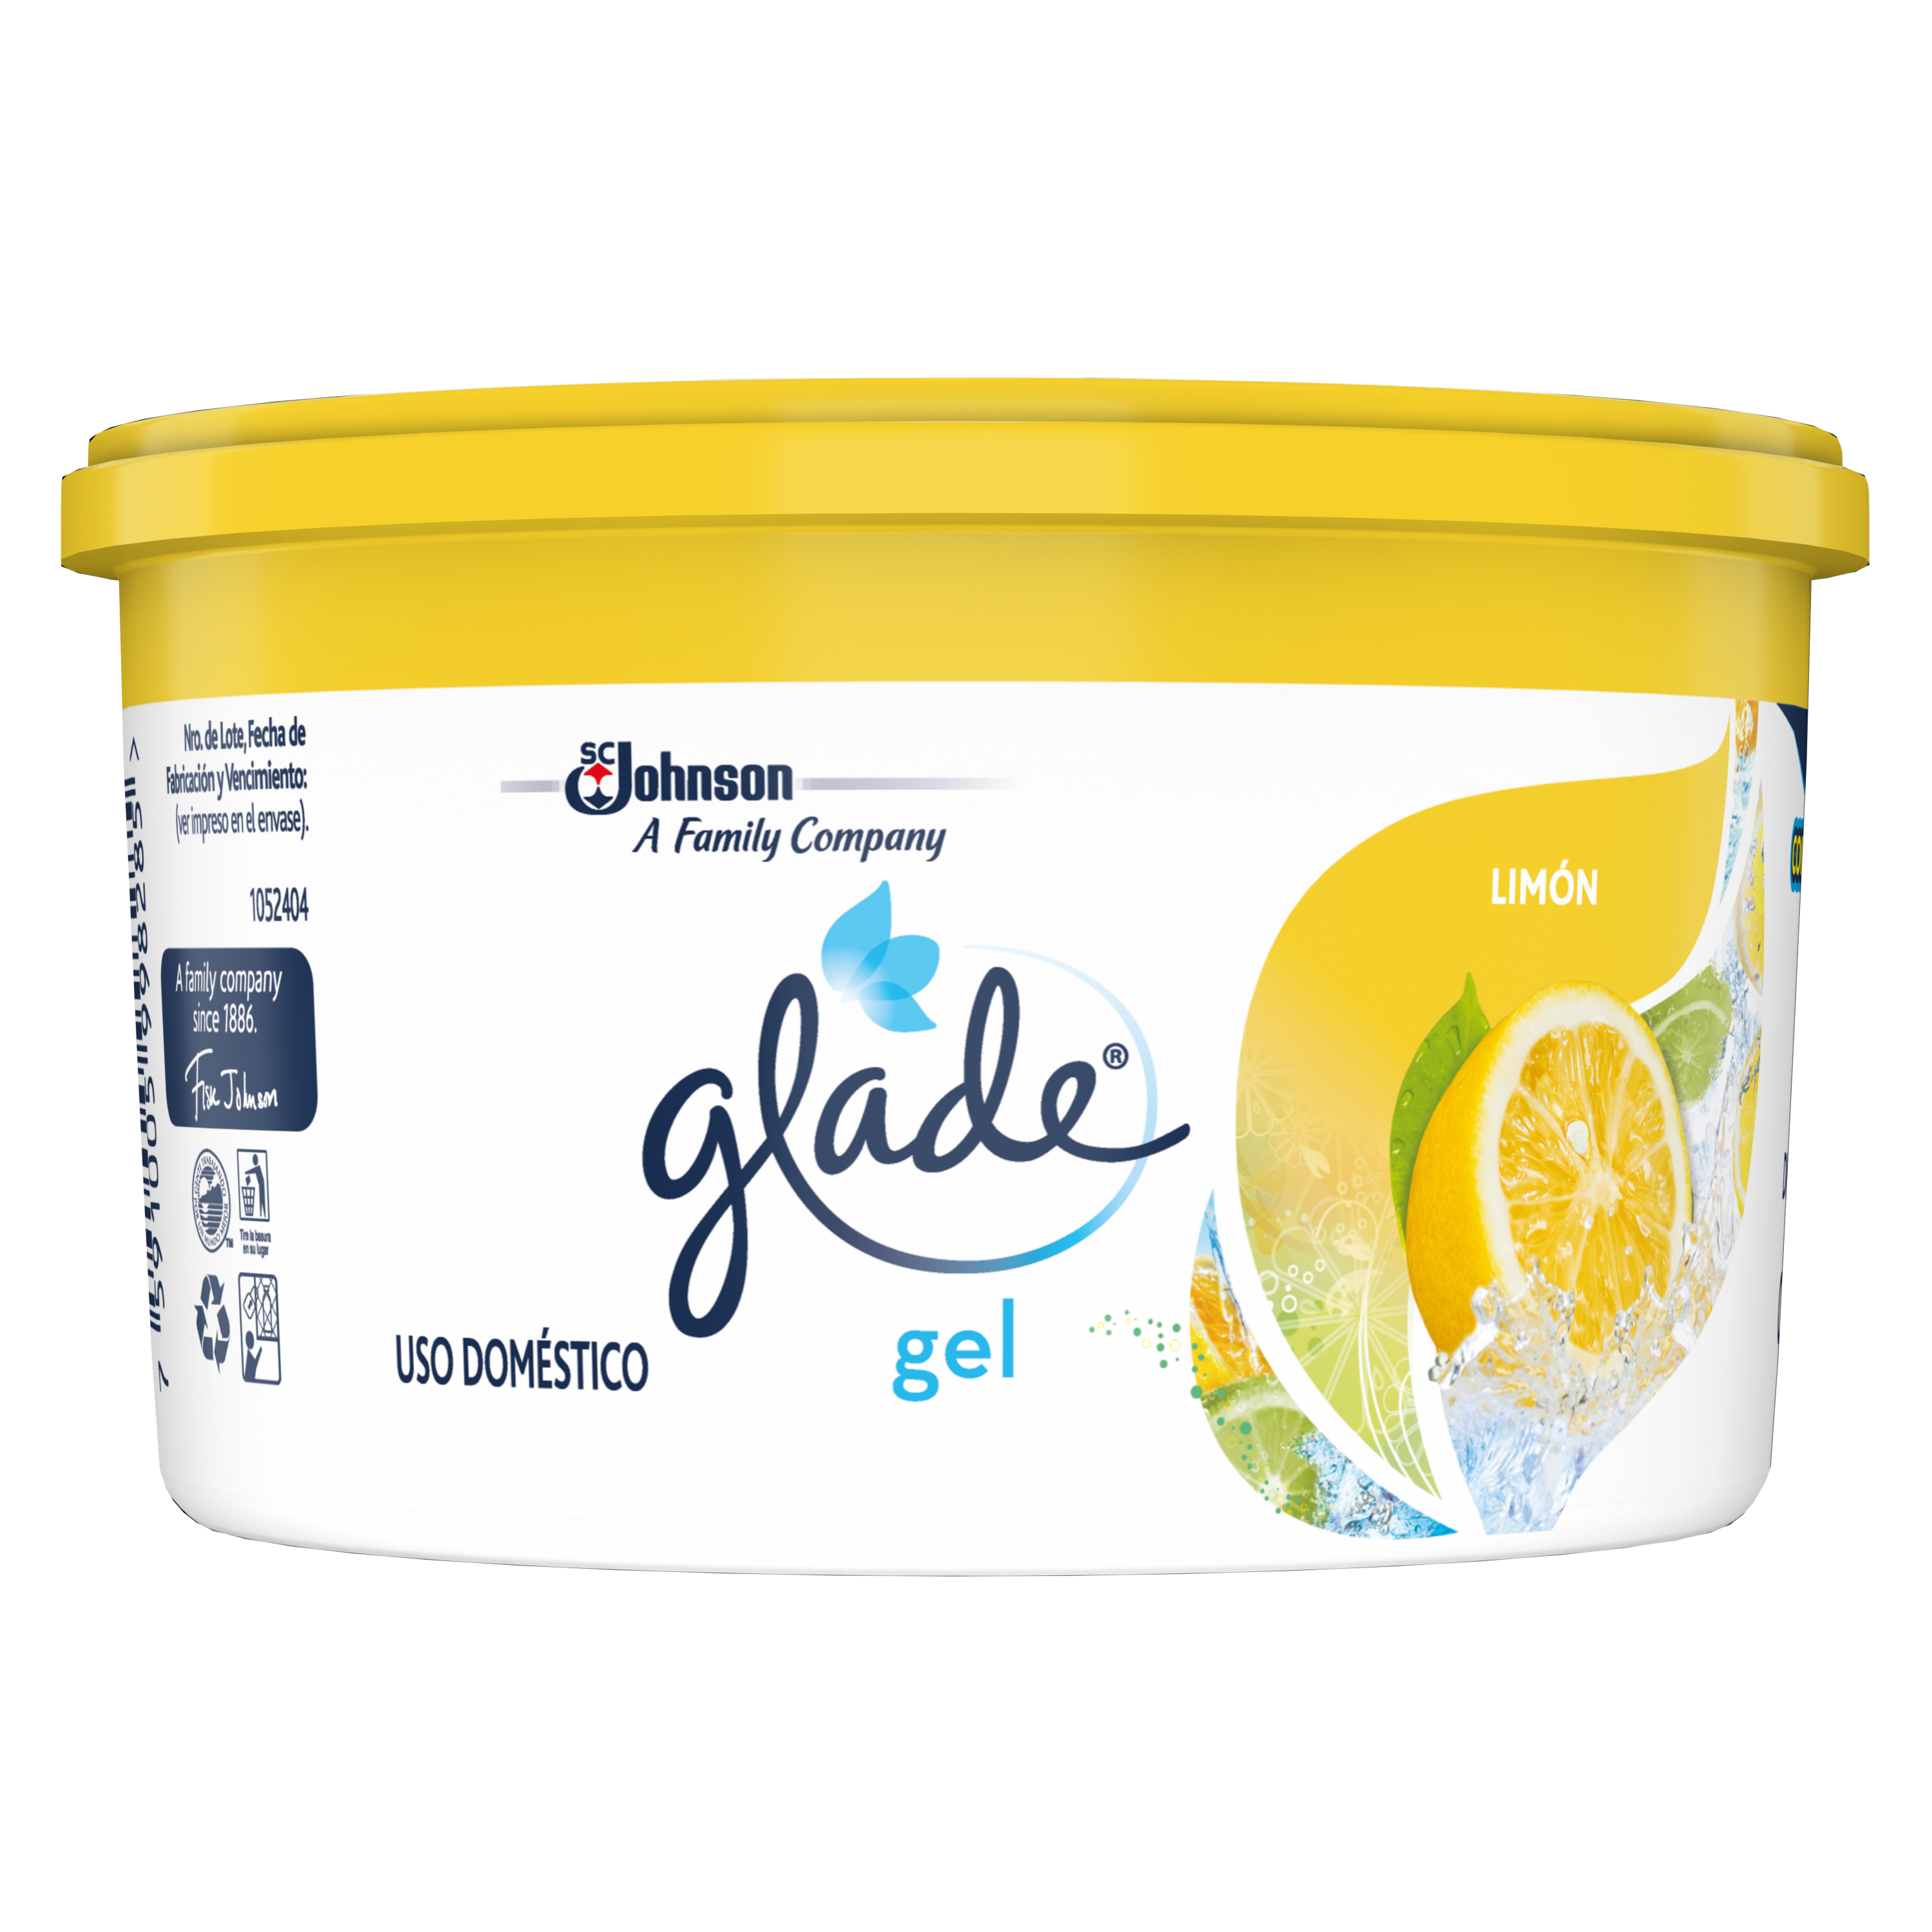 Glade® Gel Limón